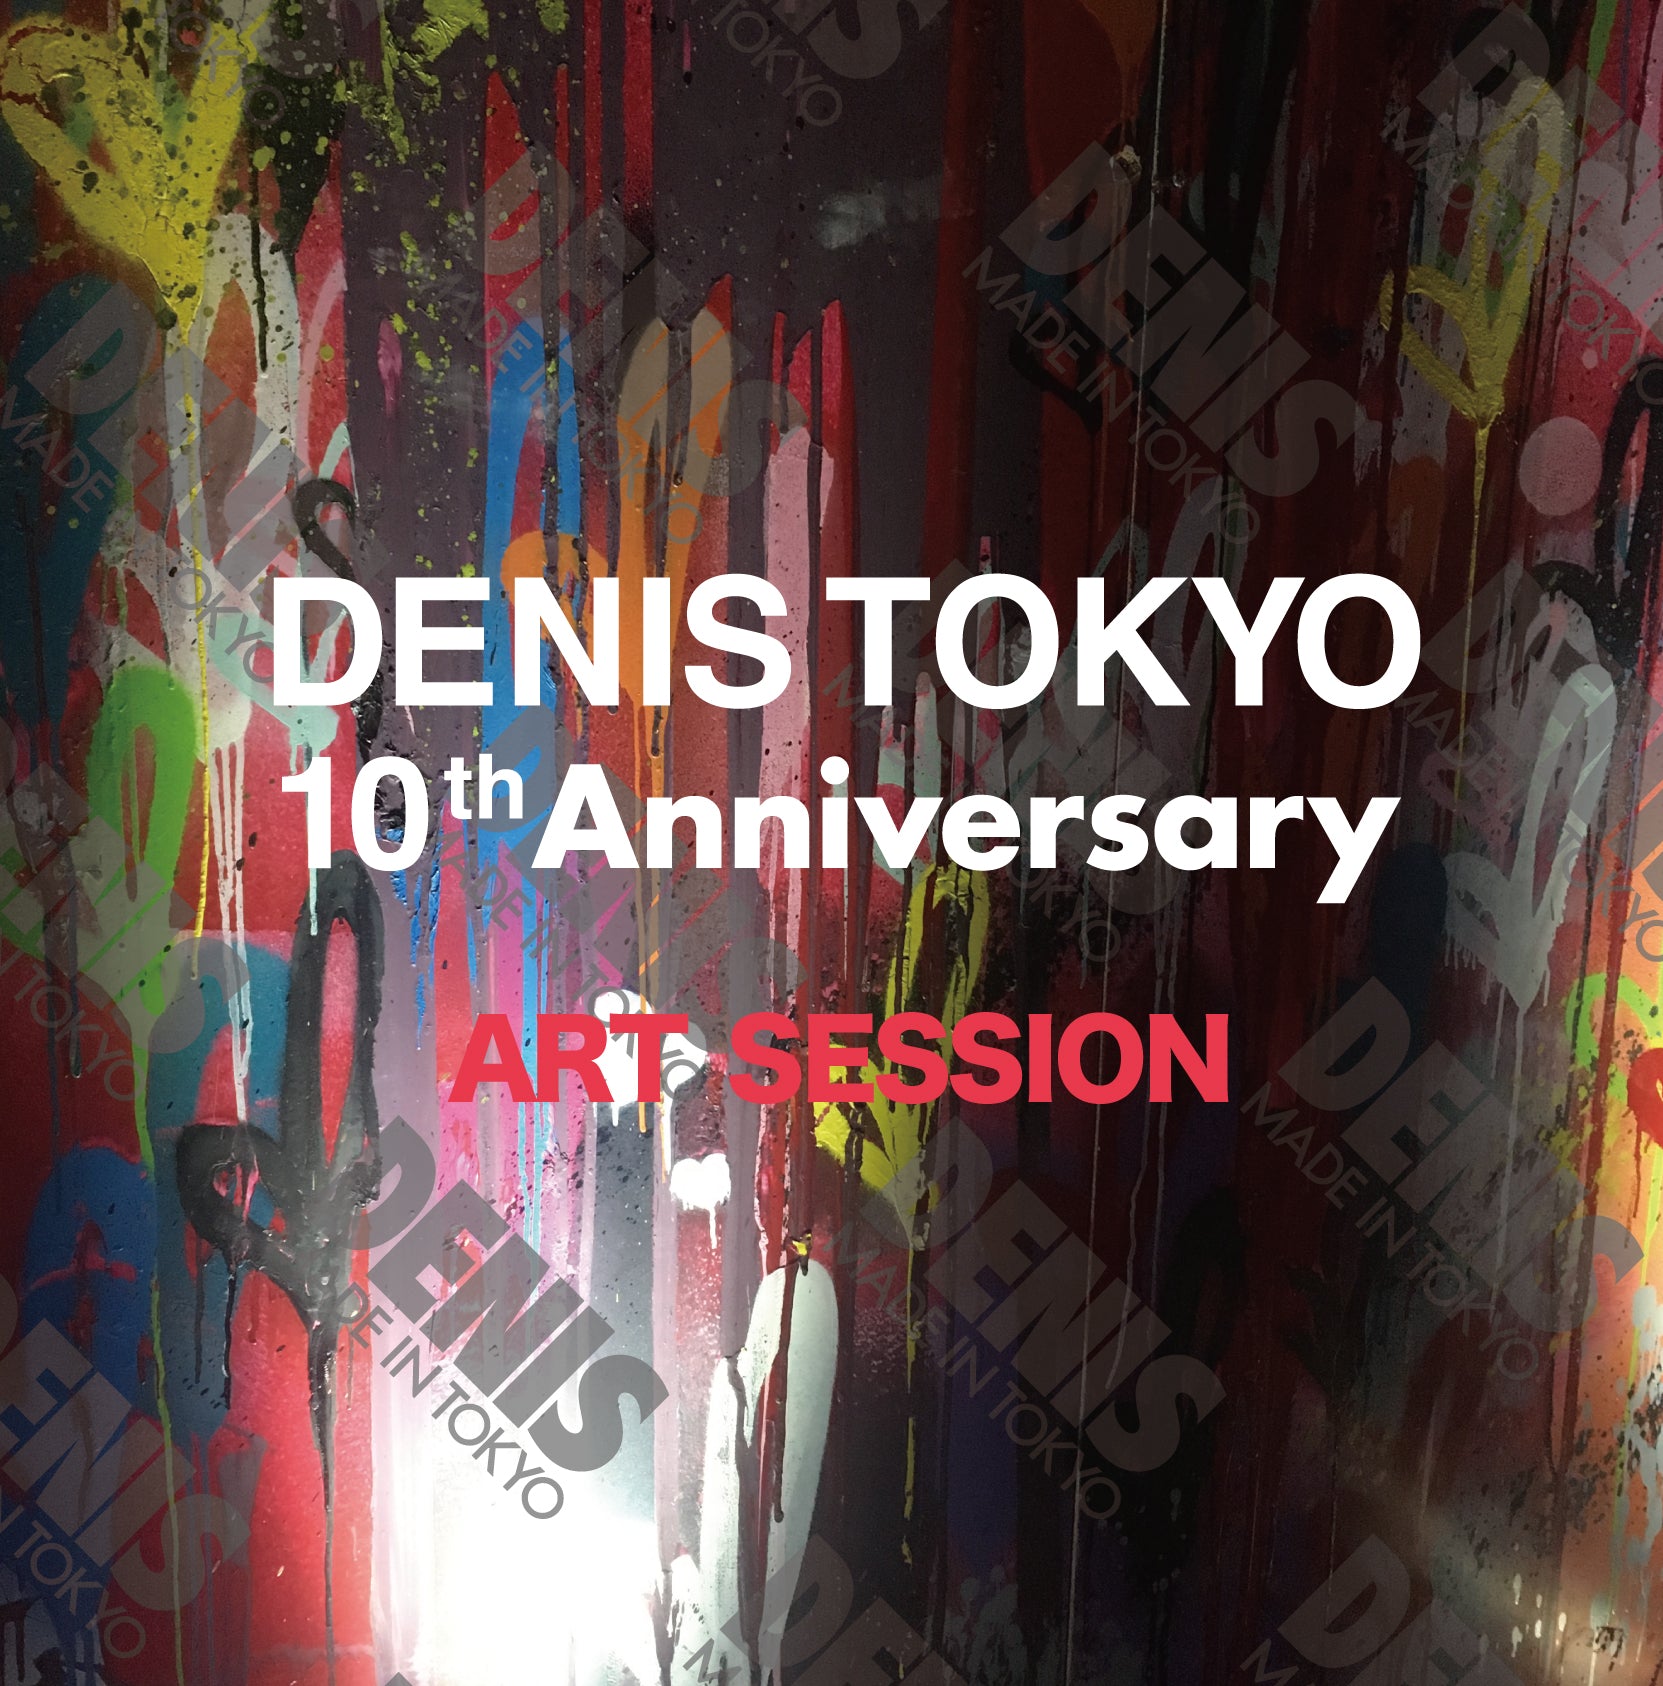 The Journal – DENIS TOKYO